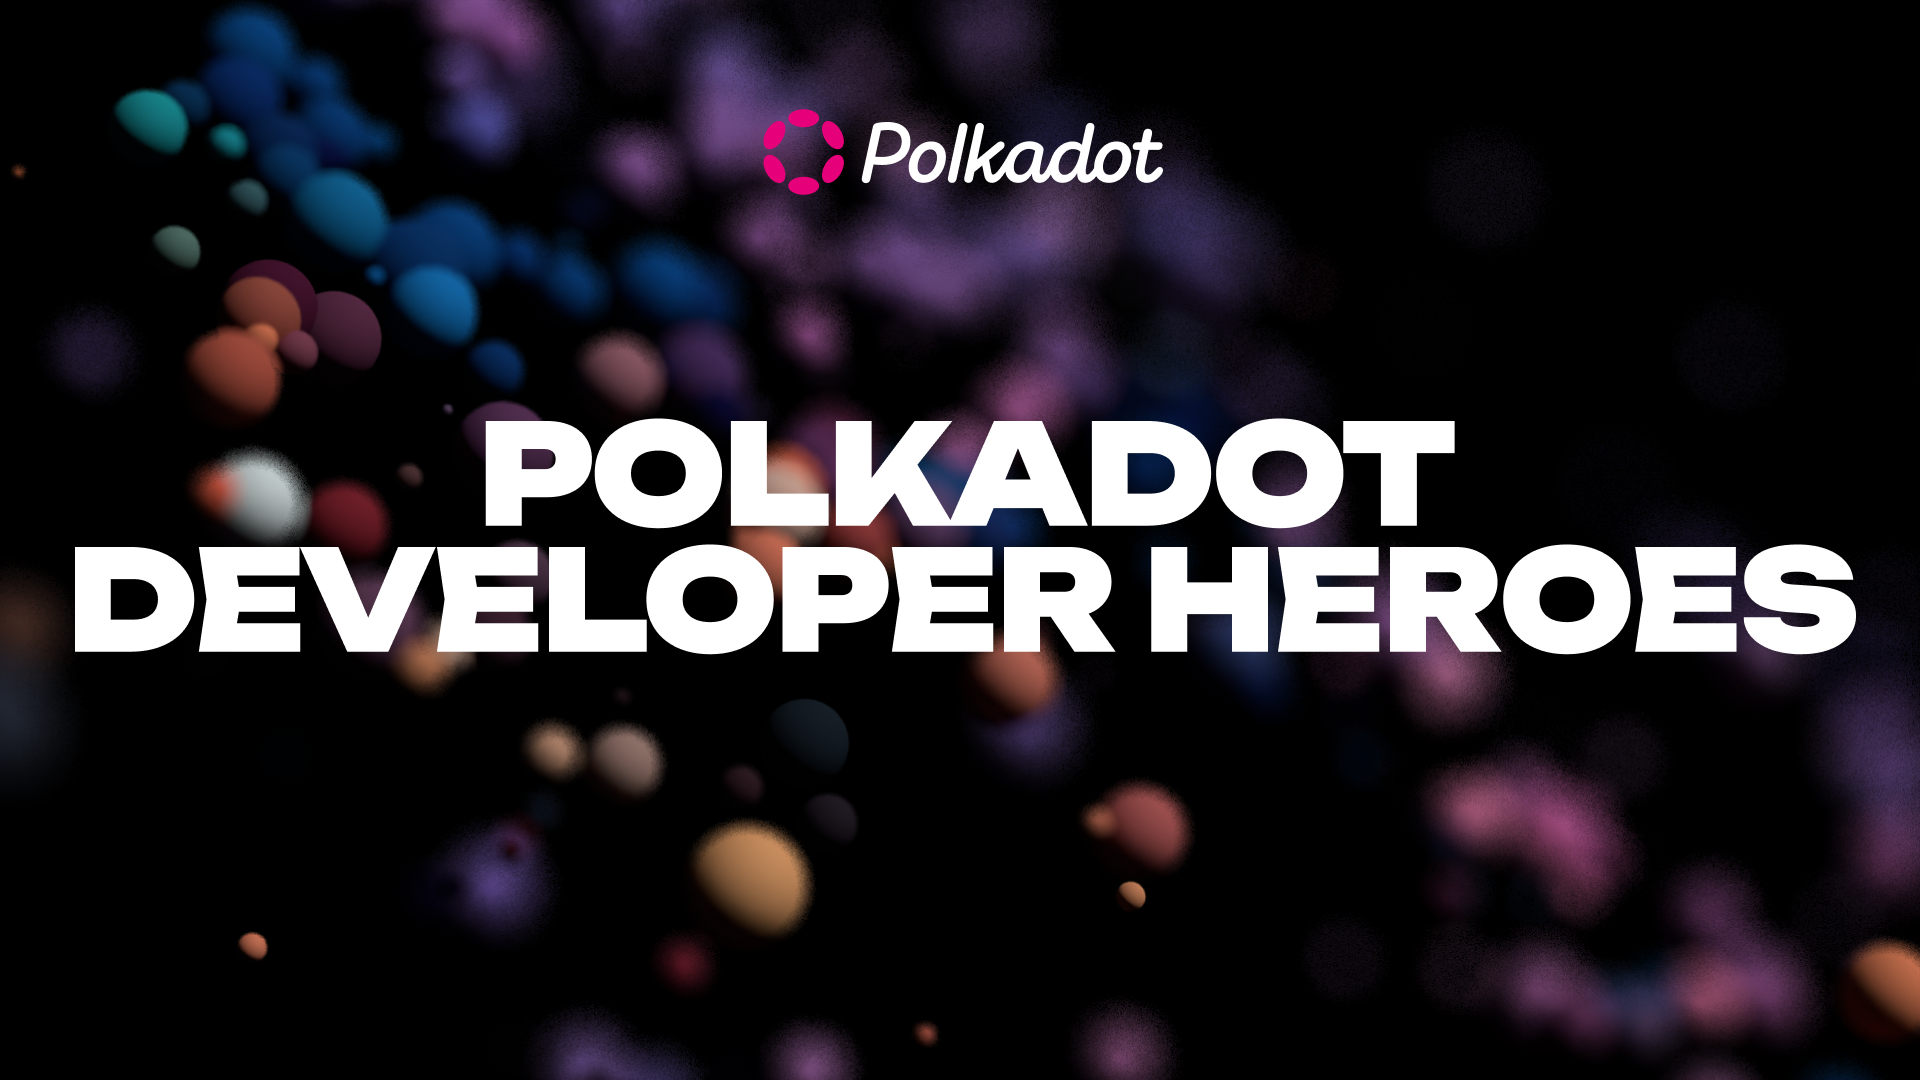 Introduzione al Polkadot Developer Heroes Program